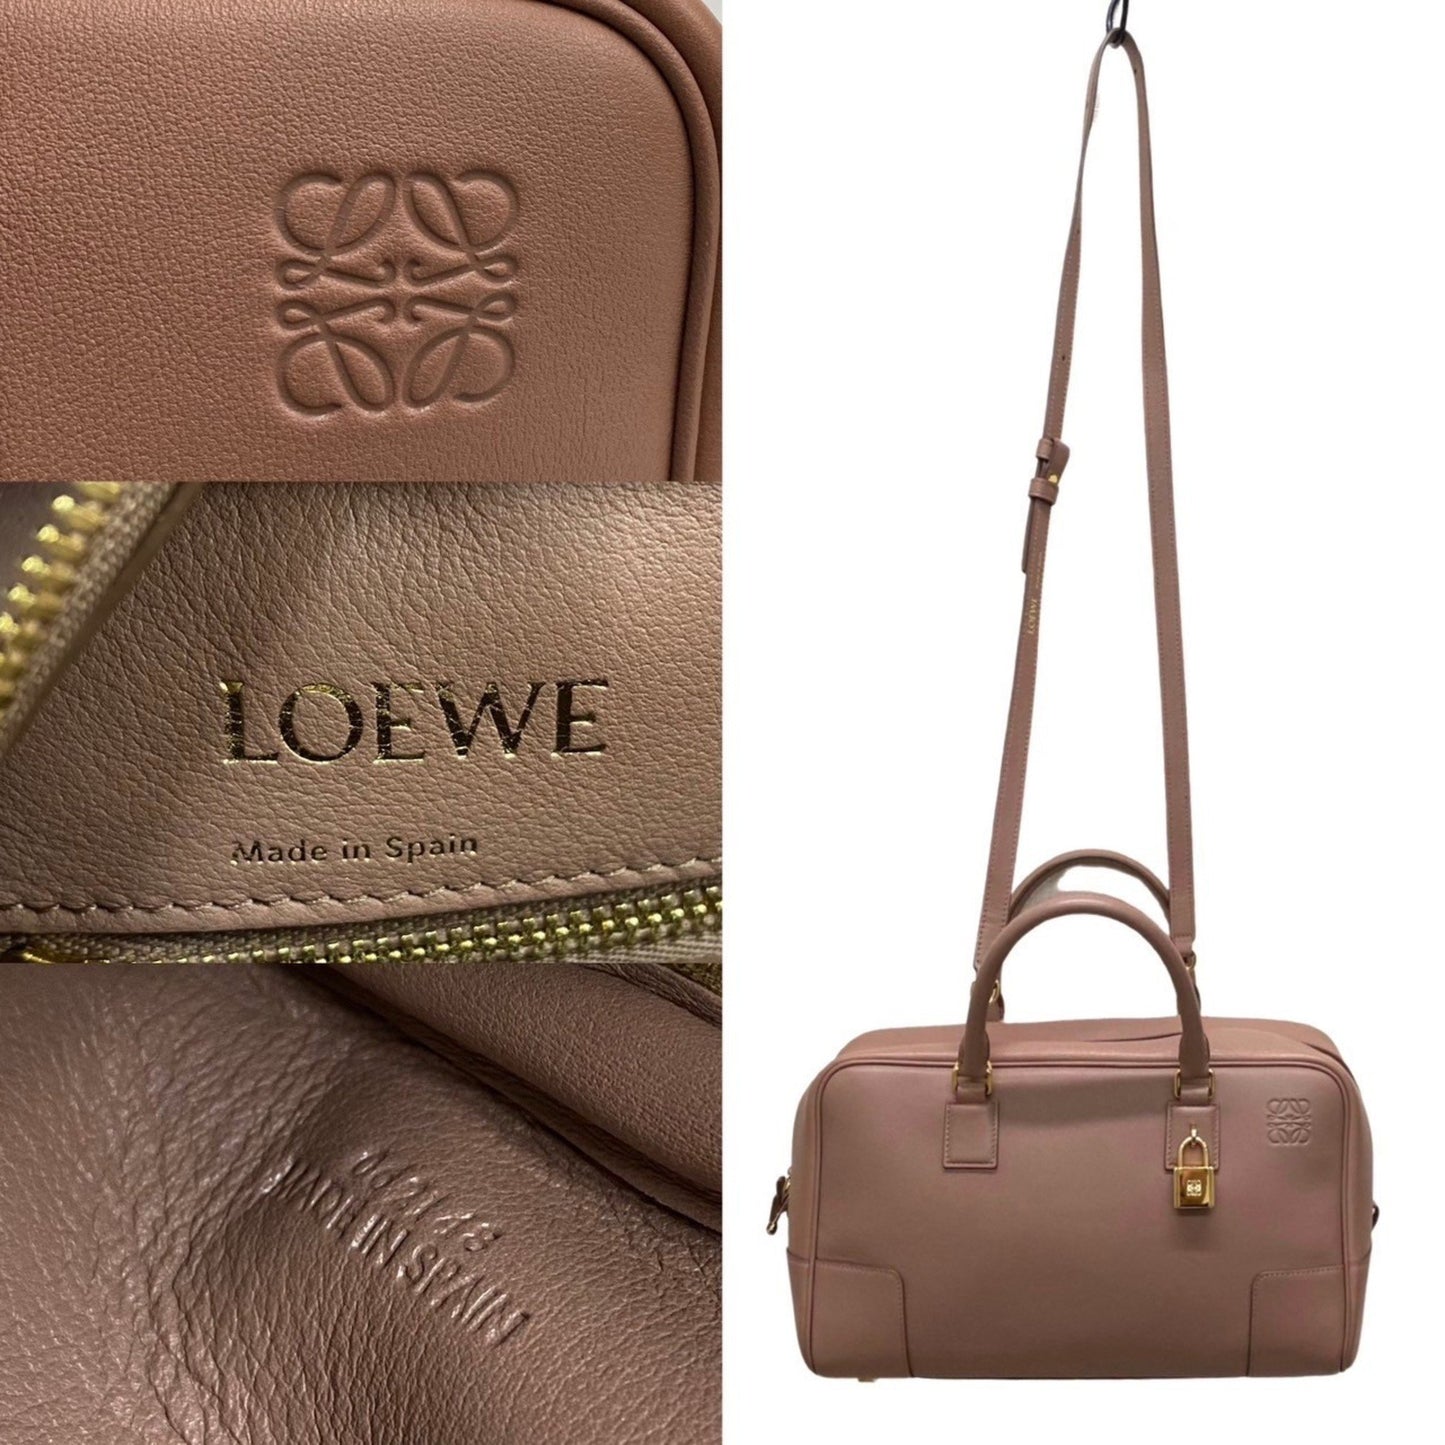 Loewe Women's Elegant Leather Handbag with Shoulder Strap in Beige